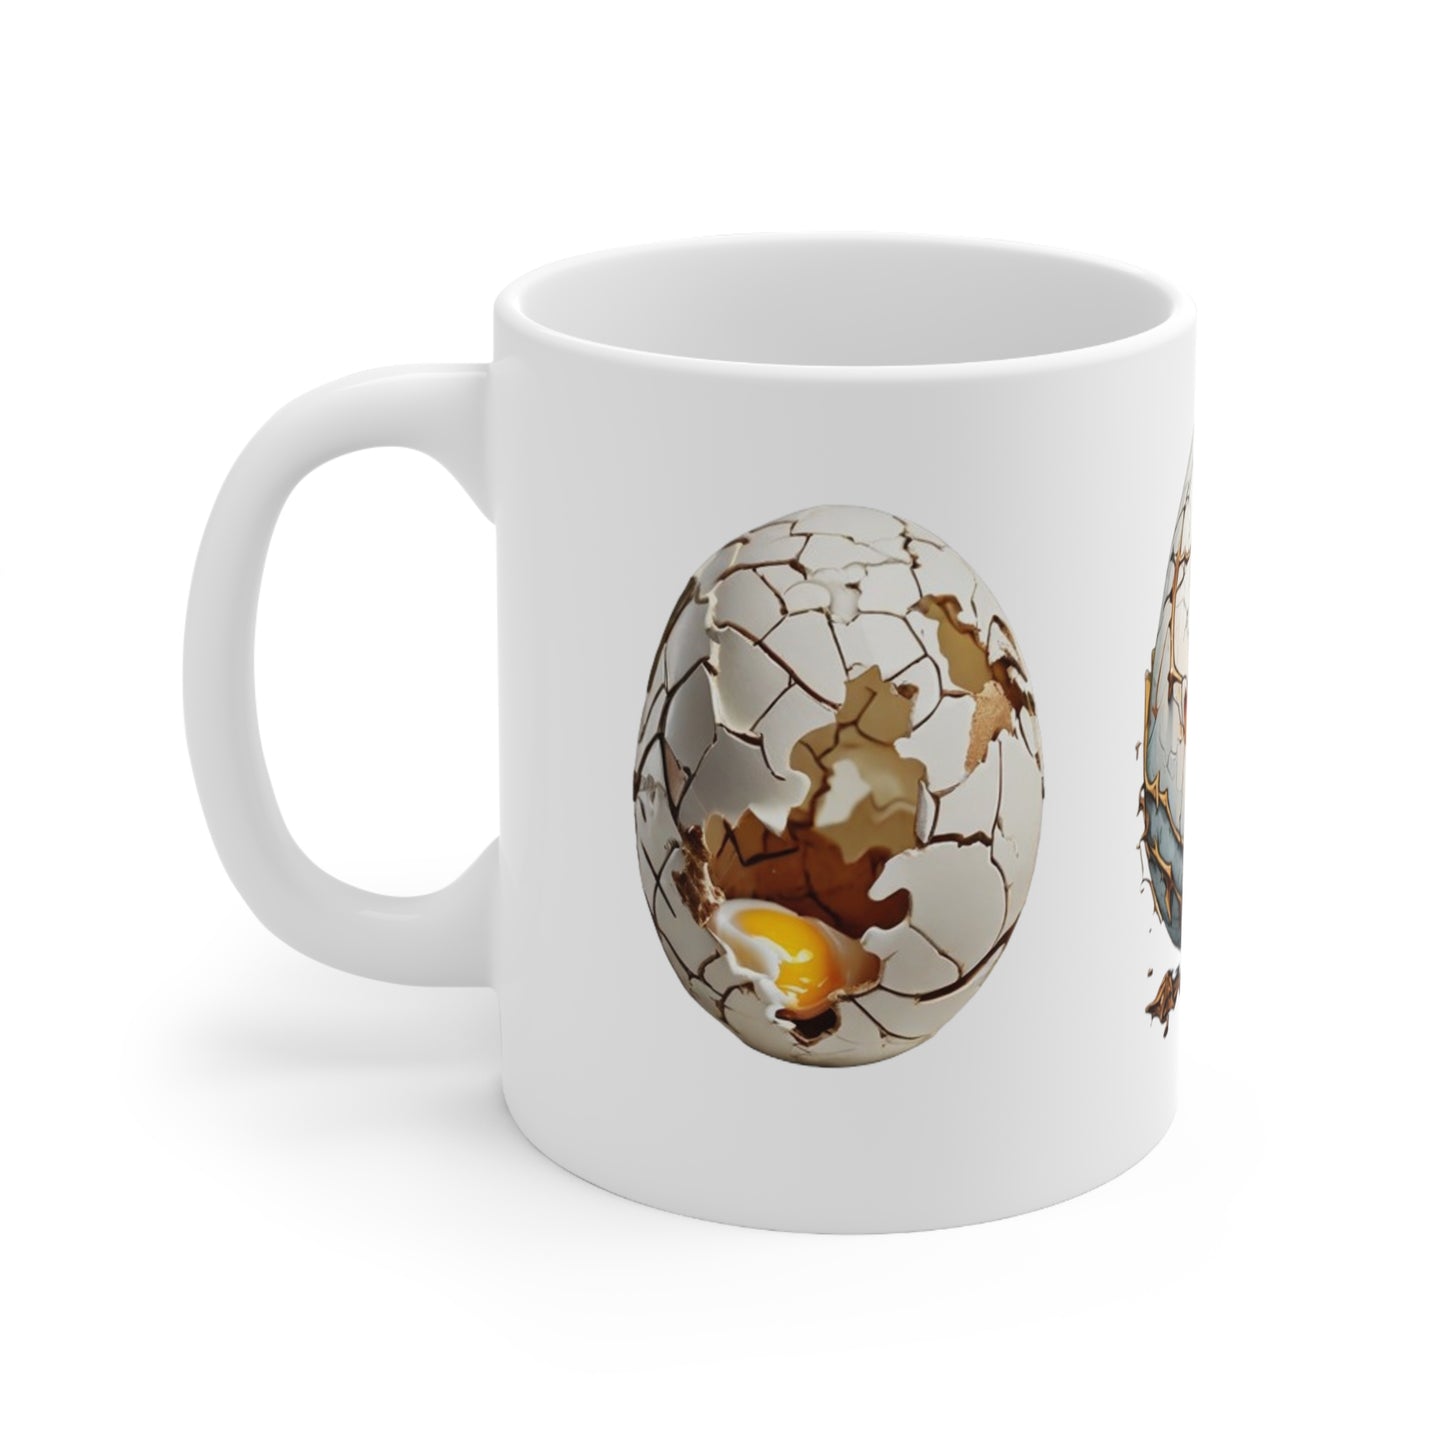 Cracked Eggs Mug - Ceramic Coffee Mug 11oz